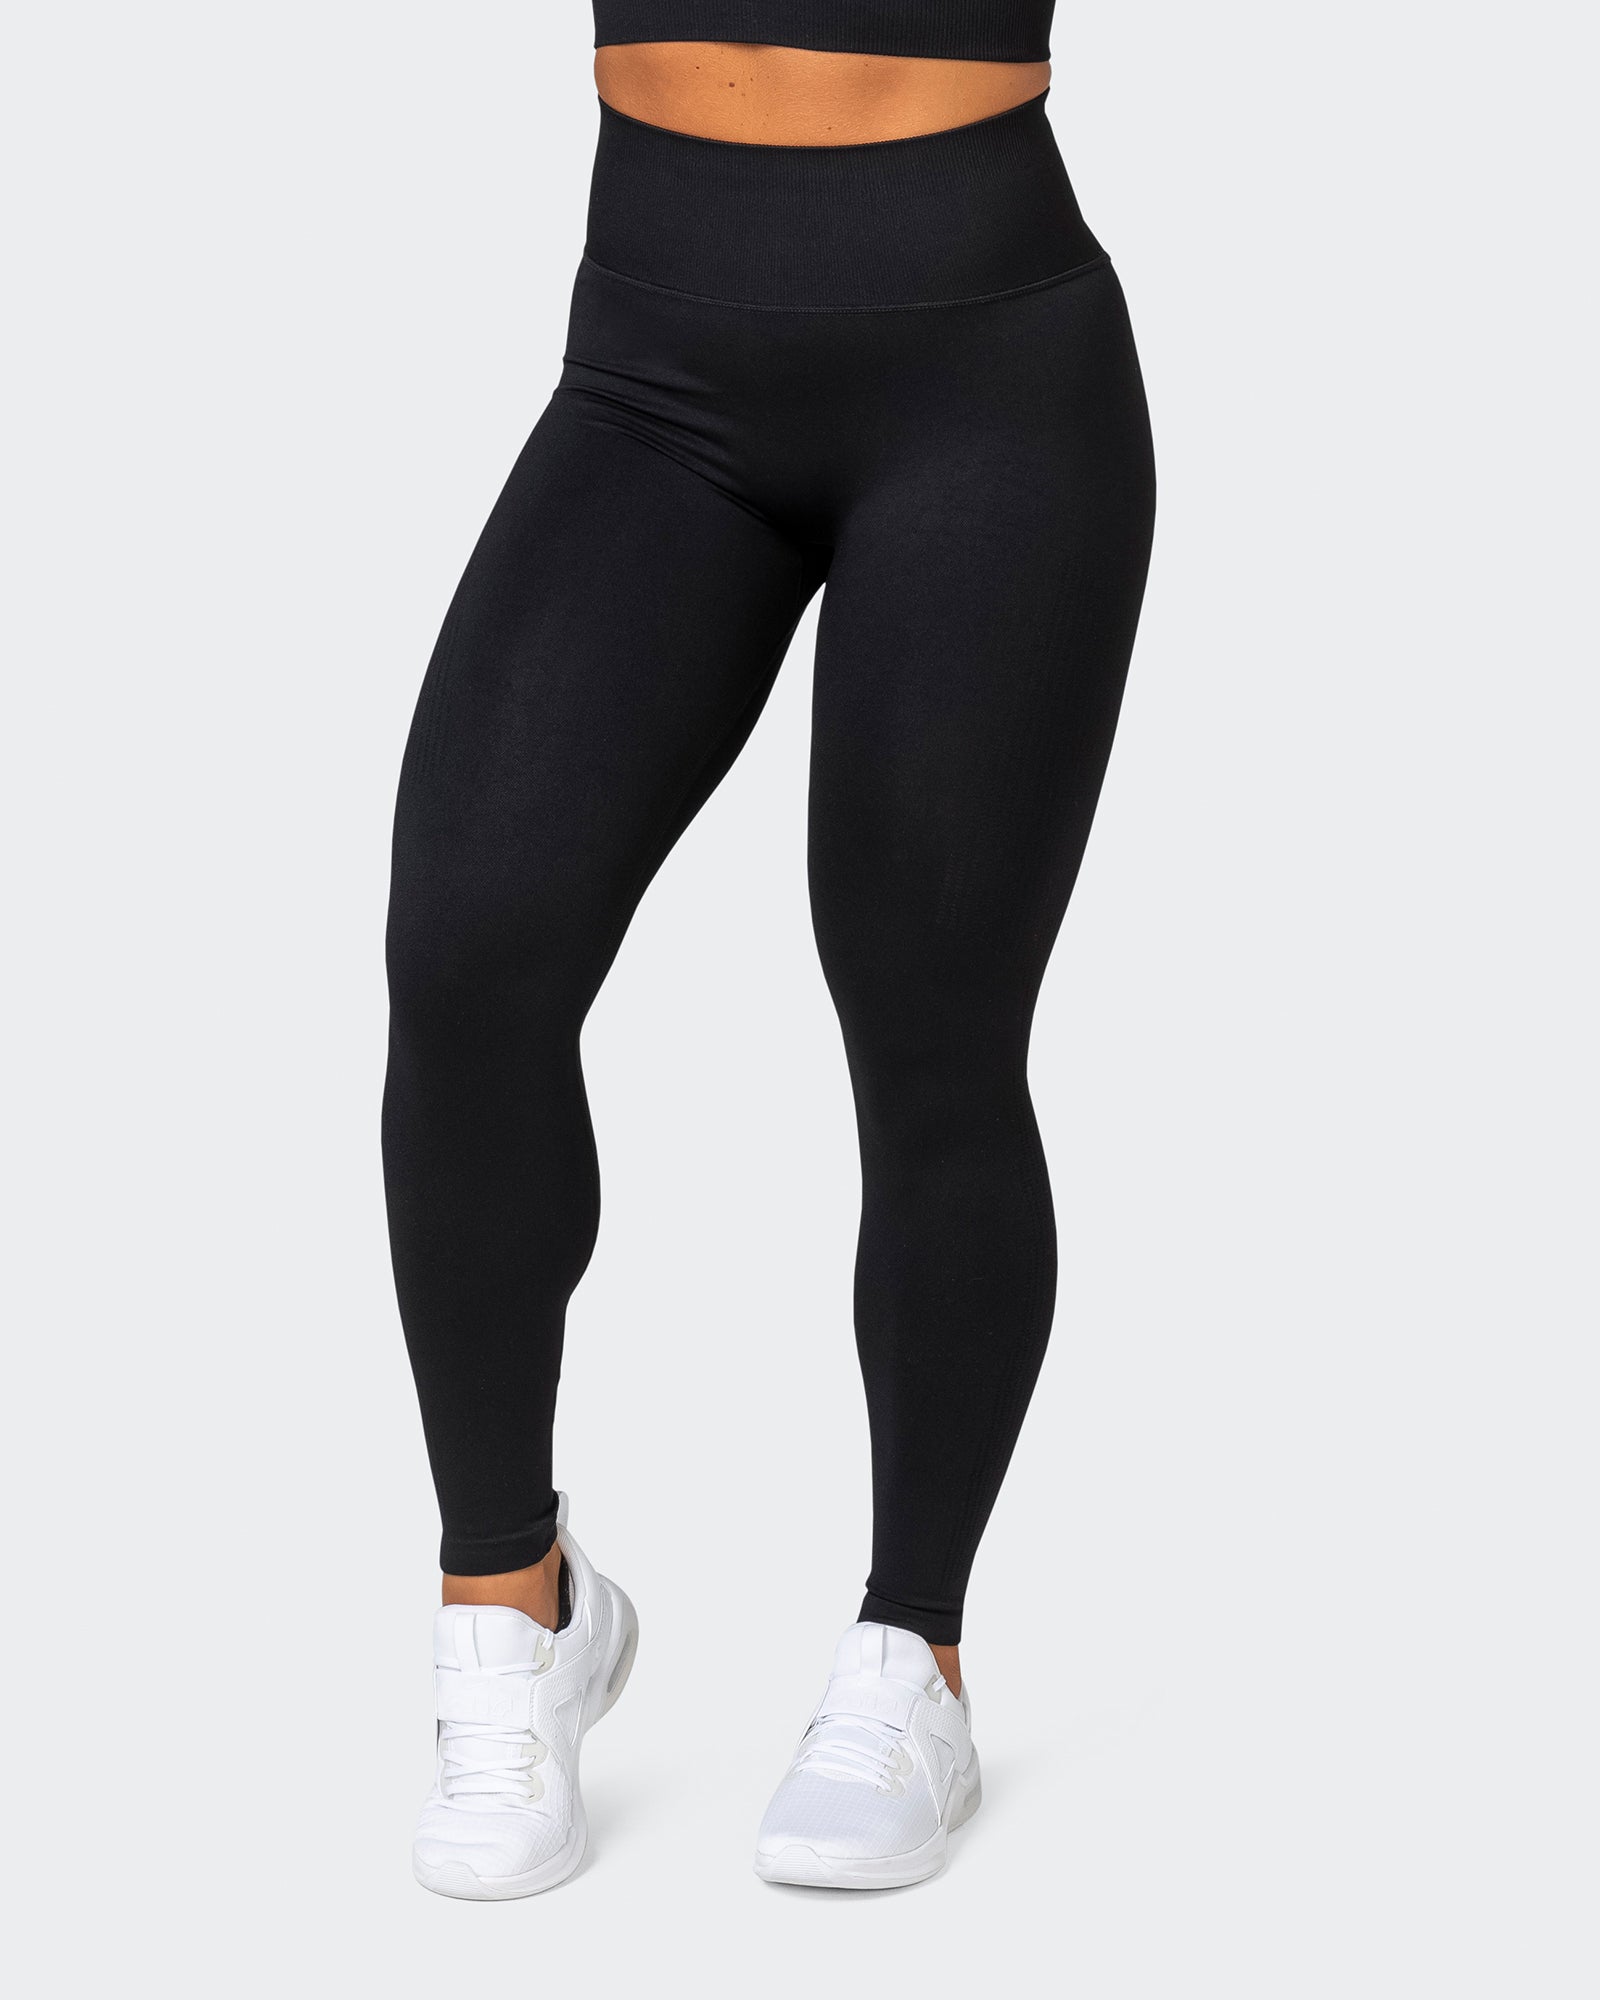 Women's Workout Leggings & Running Tights | Cotton On